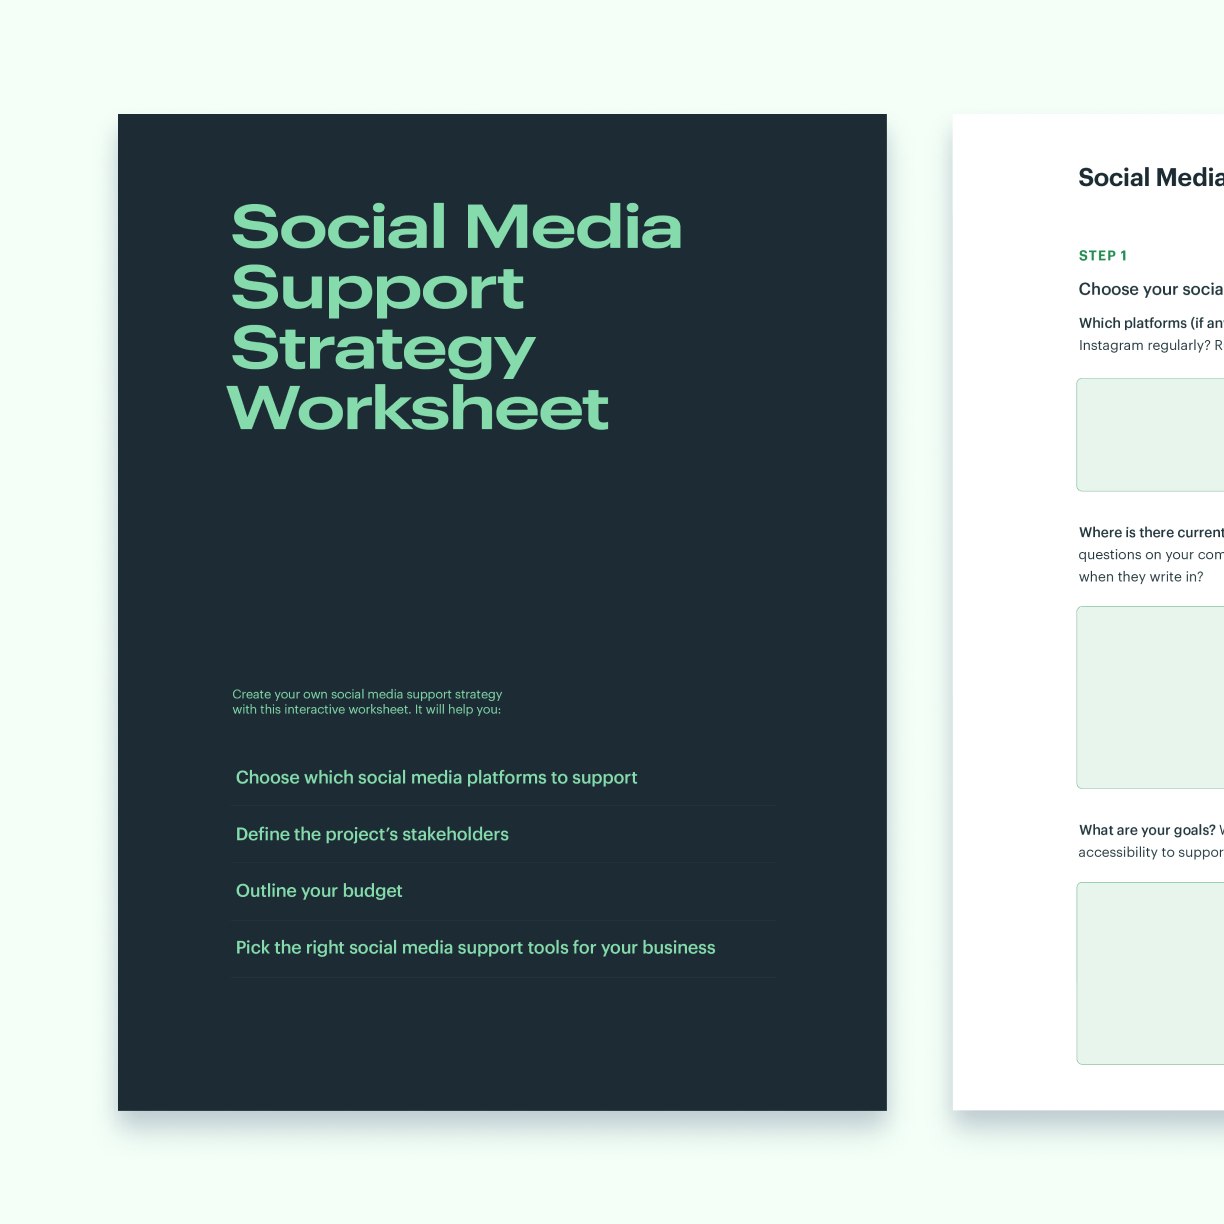 Social Media Support Strategy Worksheet - Inside the worksheet